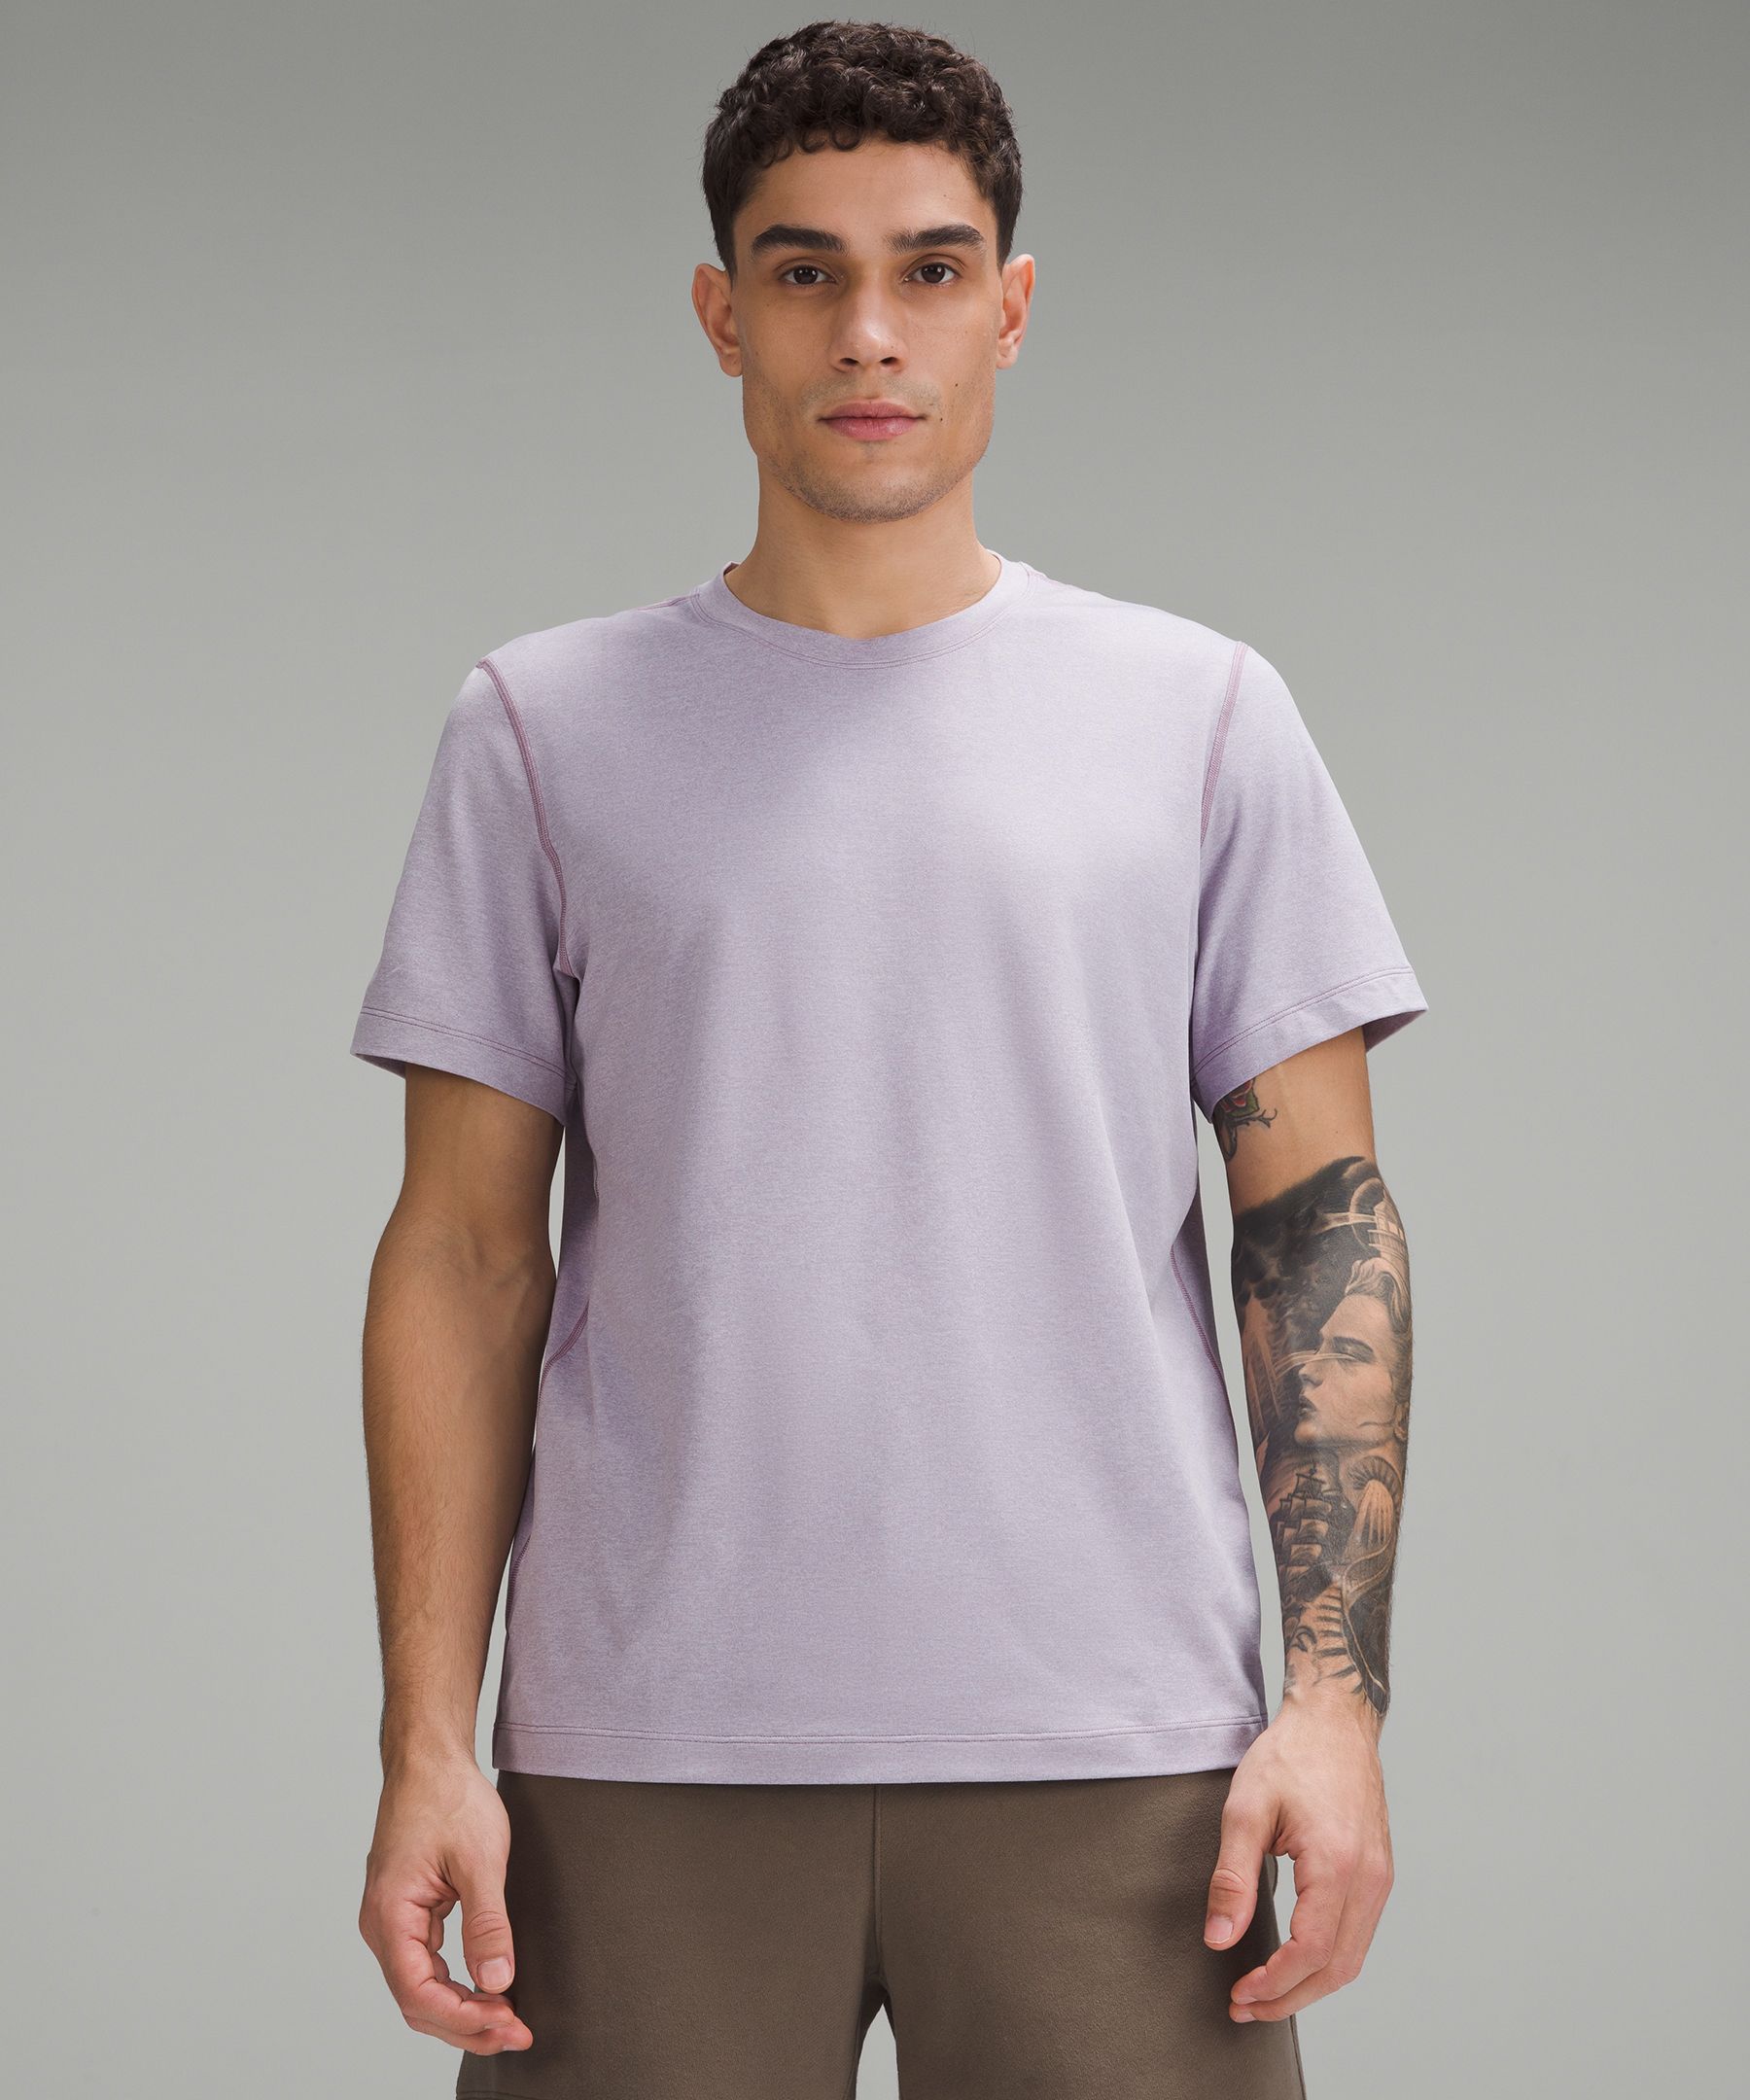 Lululemon Soft Jersey Short-sleeve Shirt